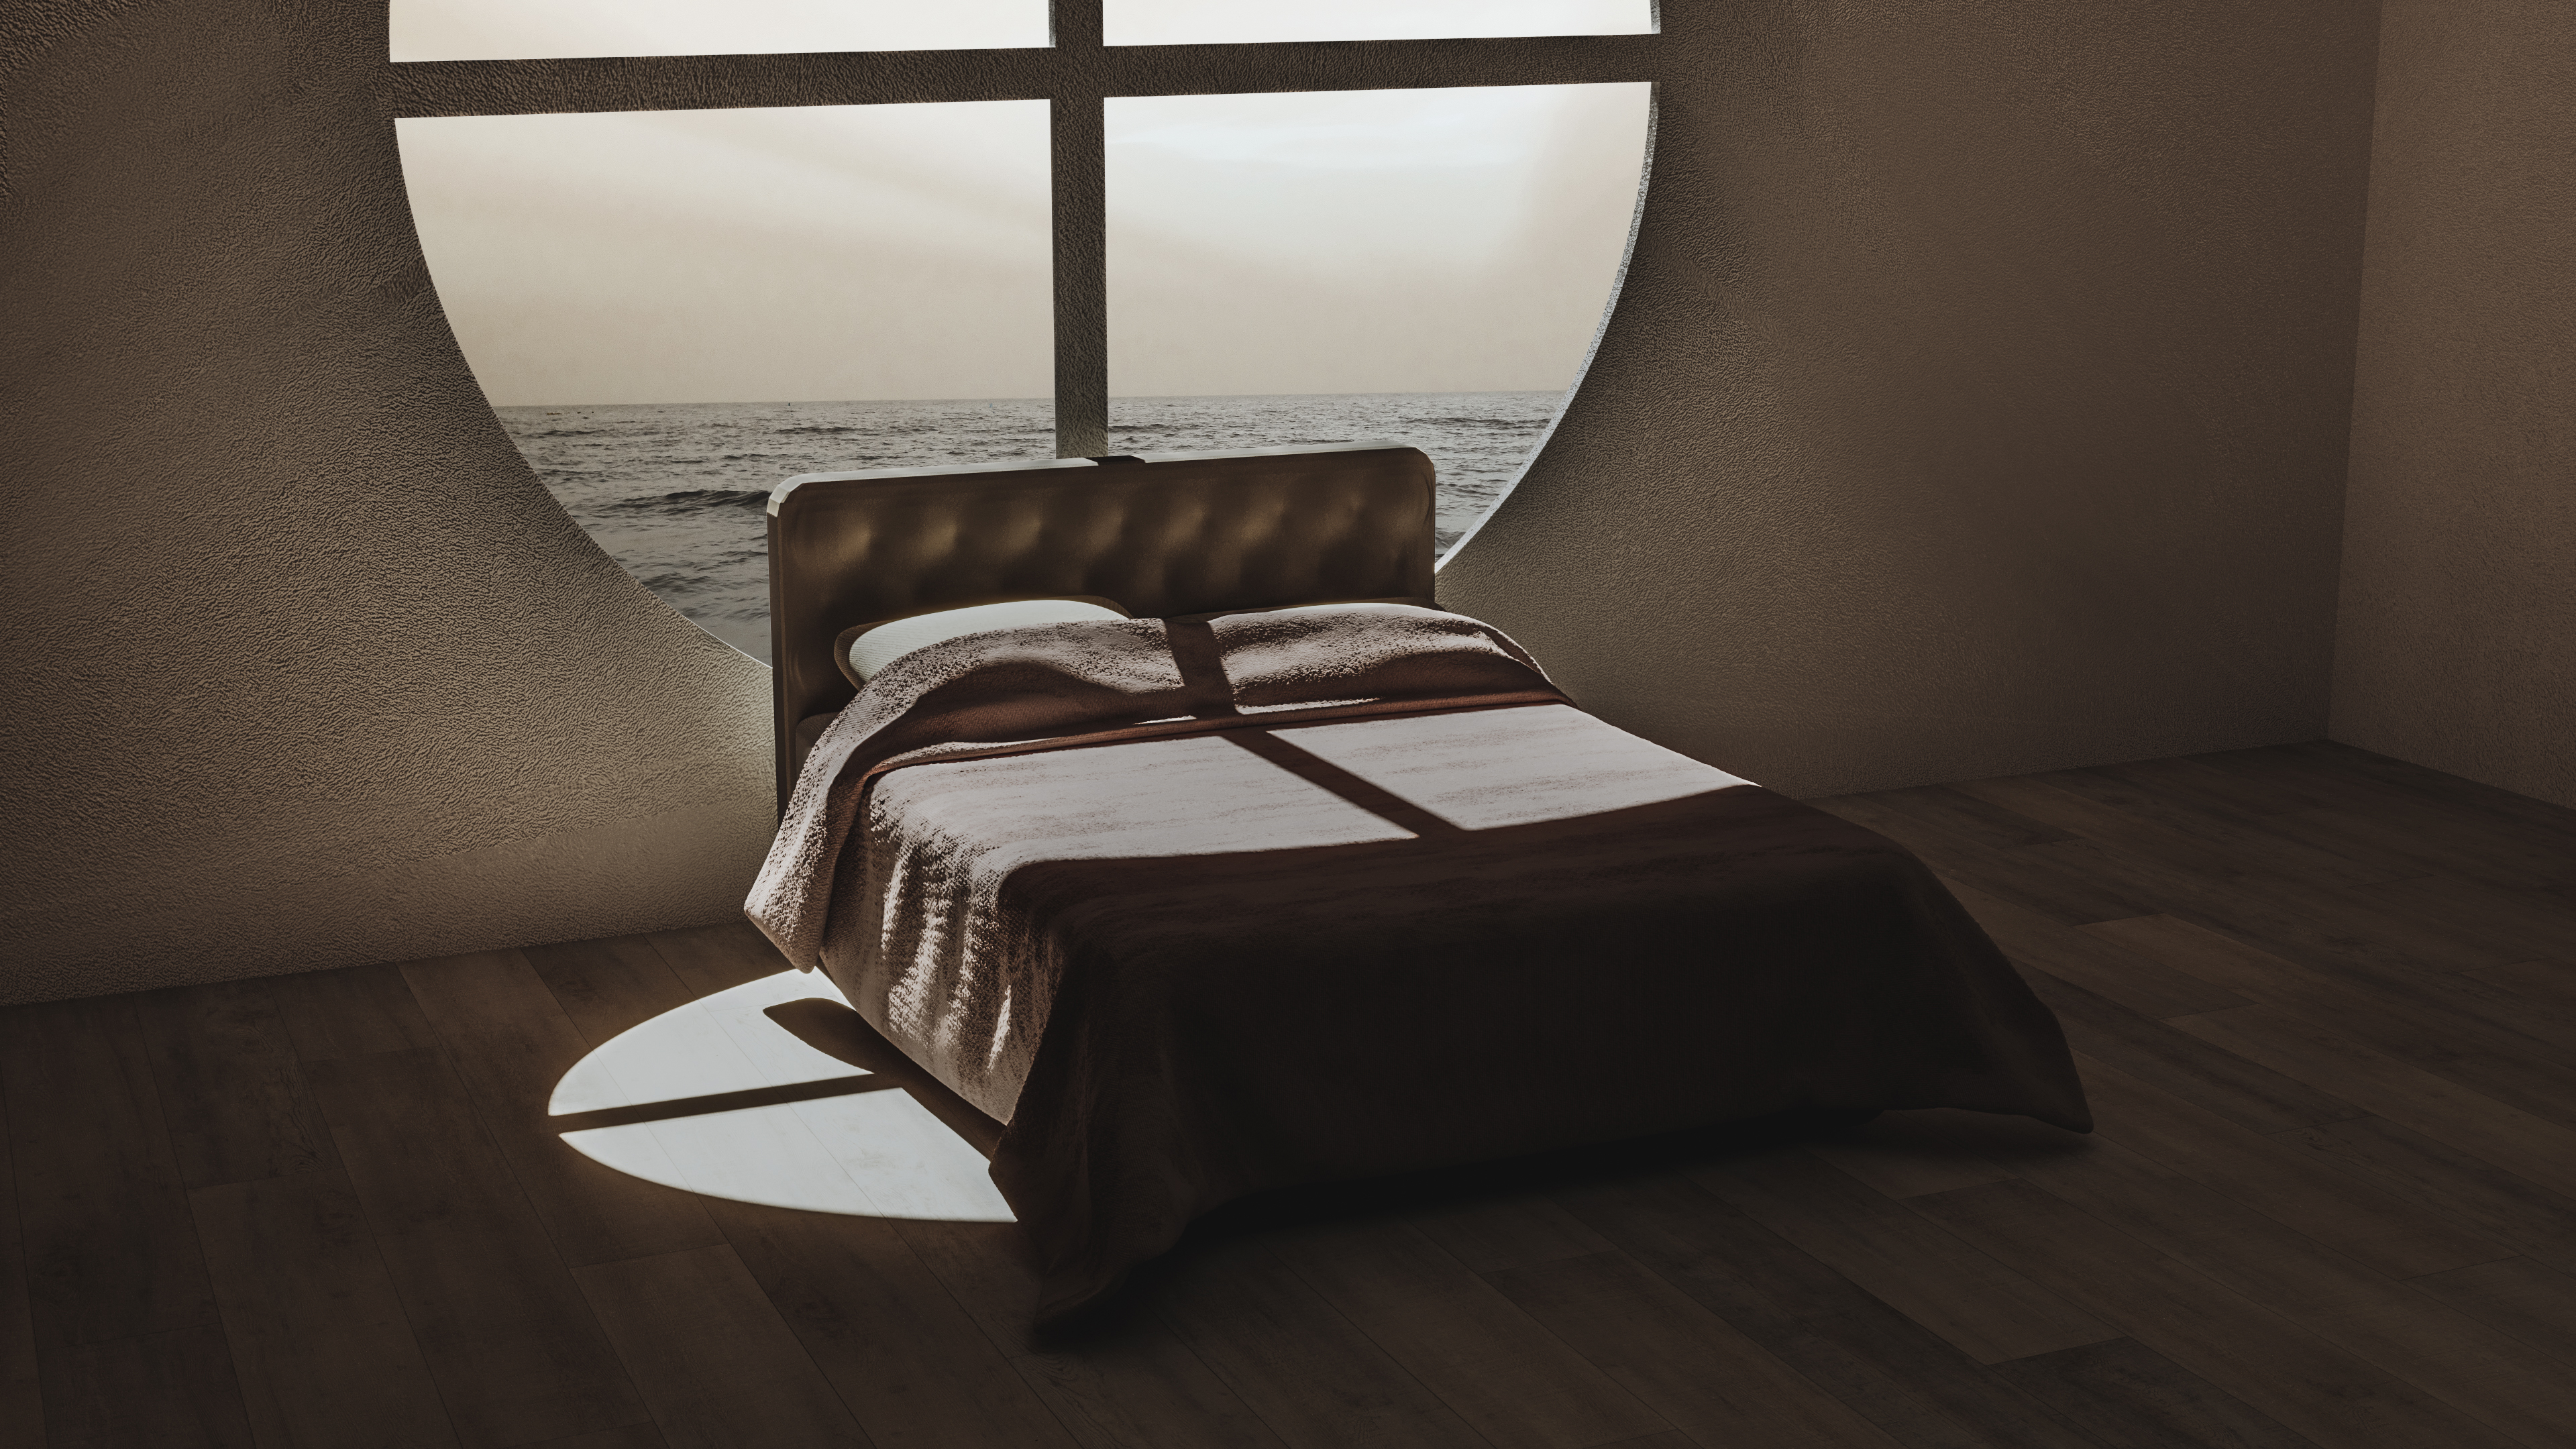 Bedroom Bed Trance Render Arc Architecture Interior Design Interior Loft Corona 3D Digital Art Artwo 3840x2160